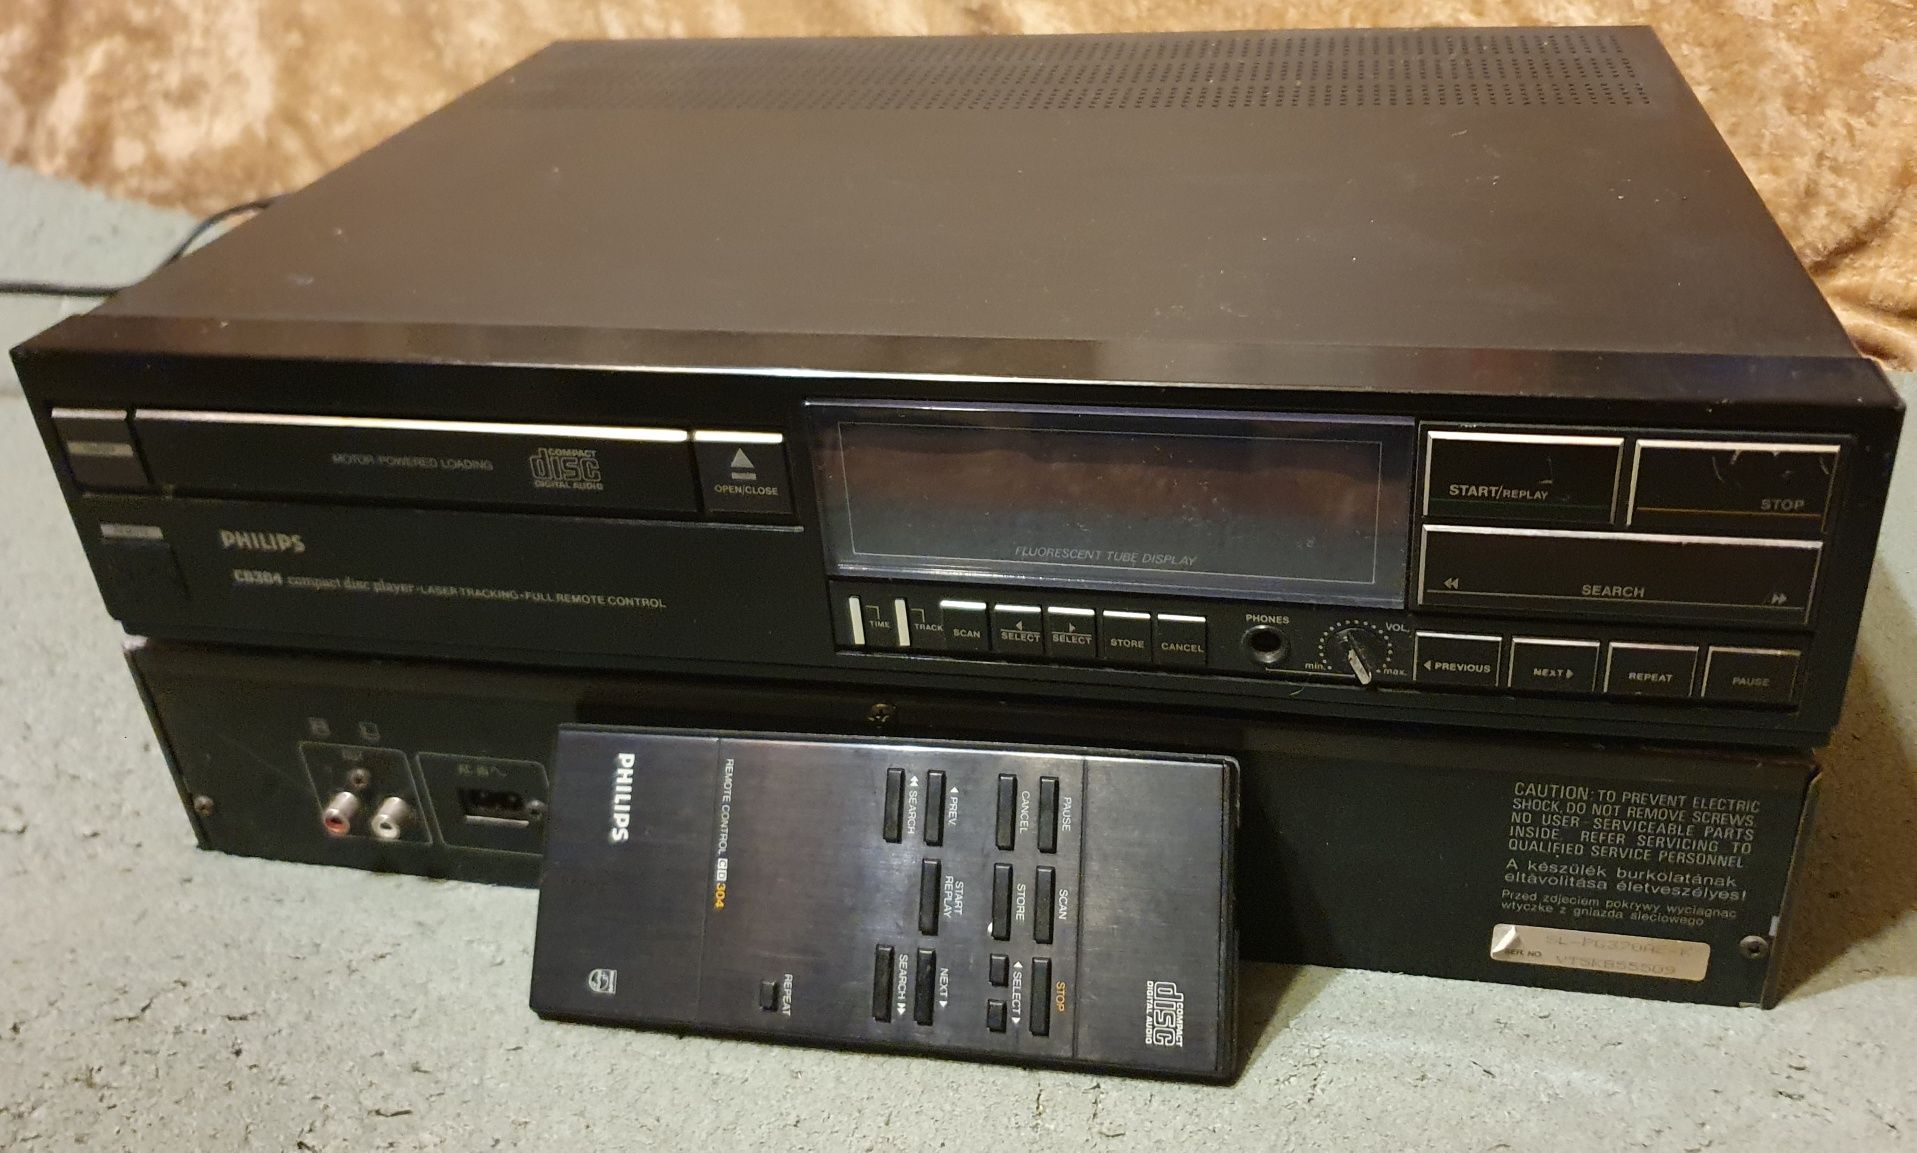 Philips cd304 mk1 cu telecomanda, aparat rar, 2xTda1540 +CDM1